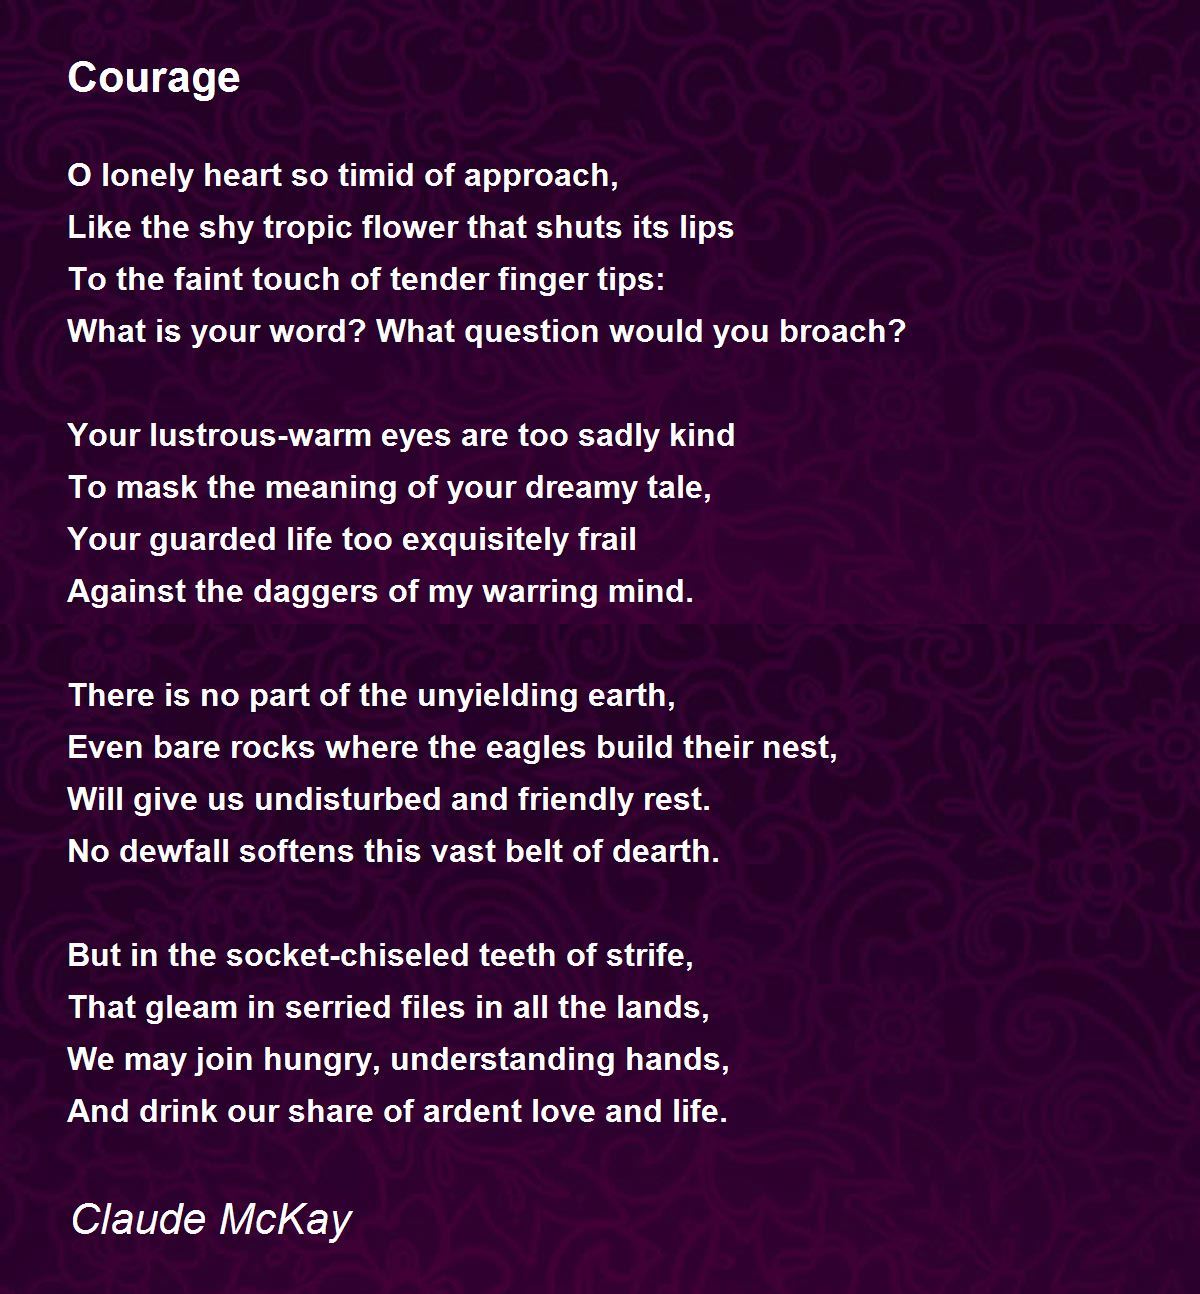 Courage Poem by Claude McKay - Poem Hunter